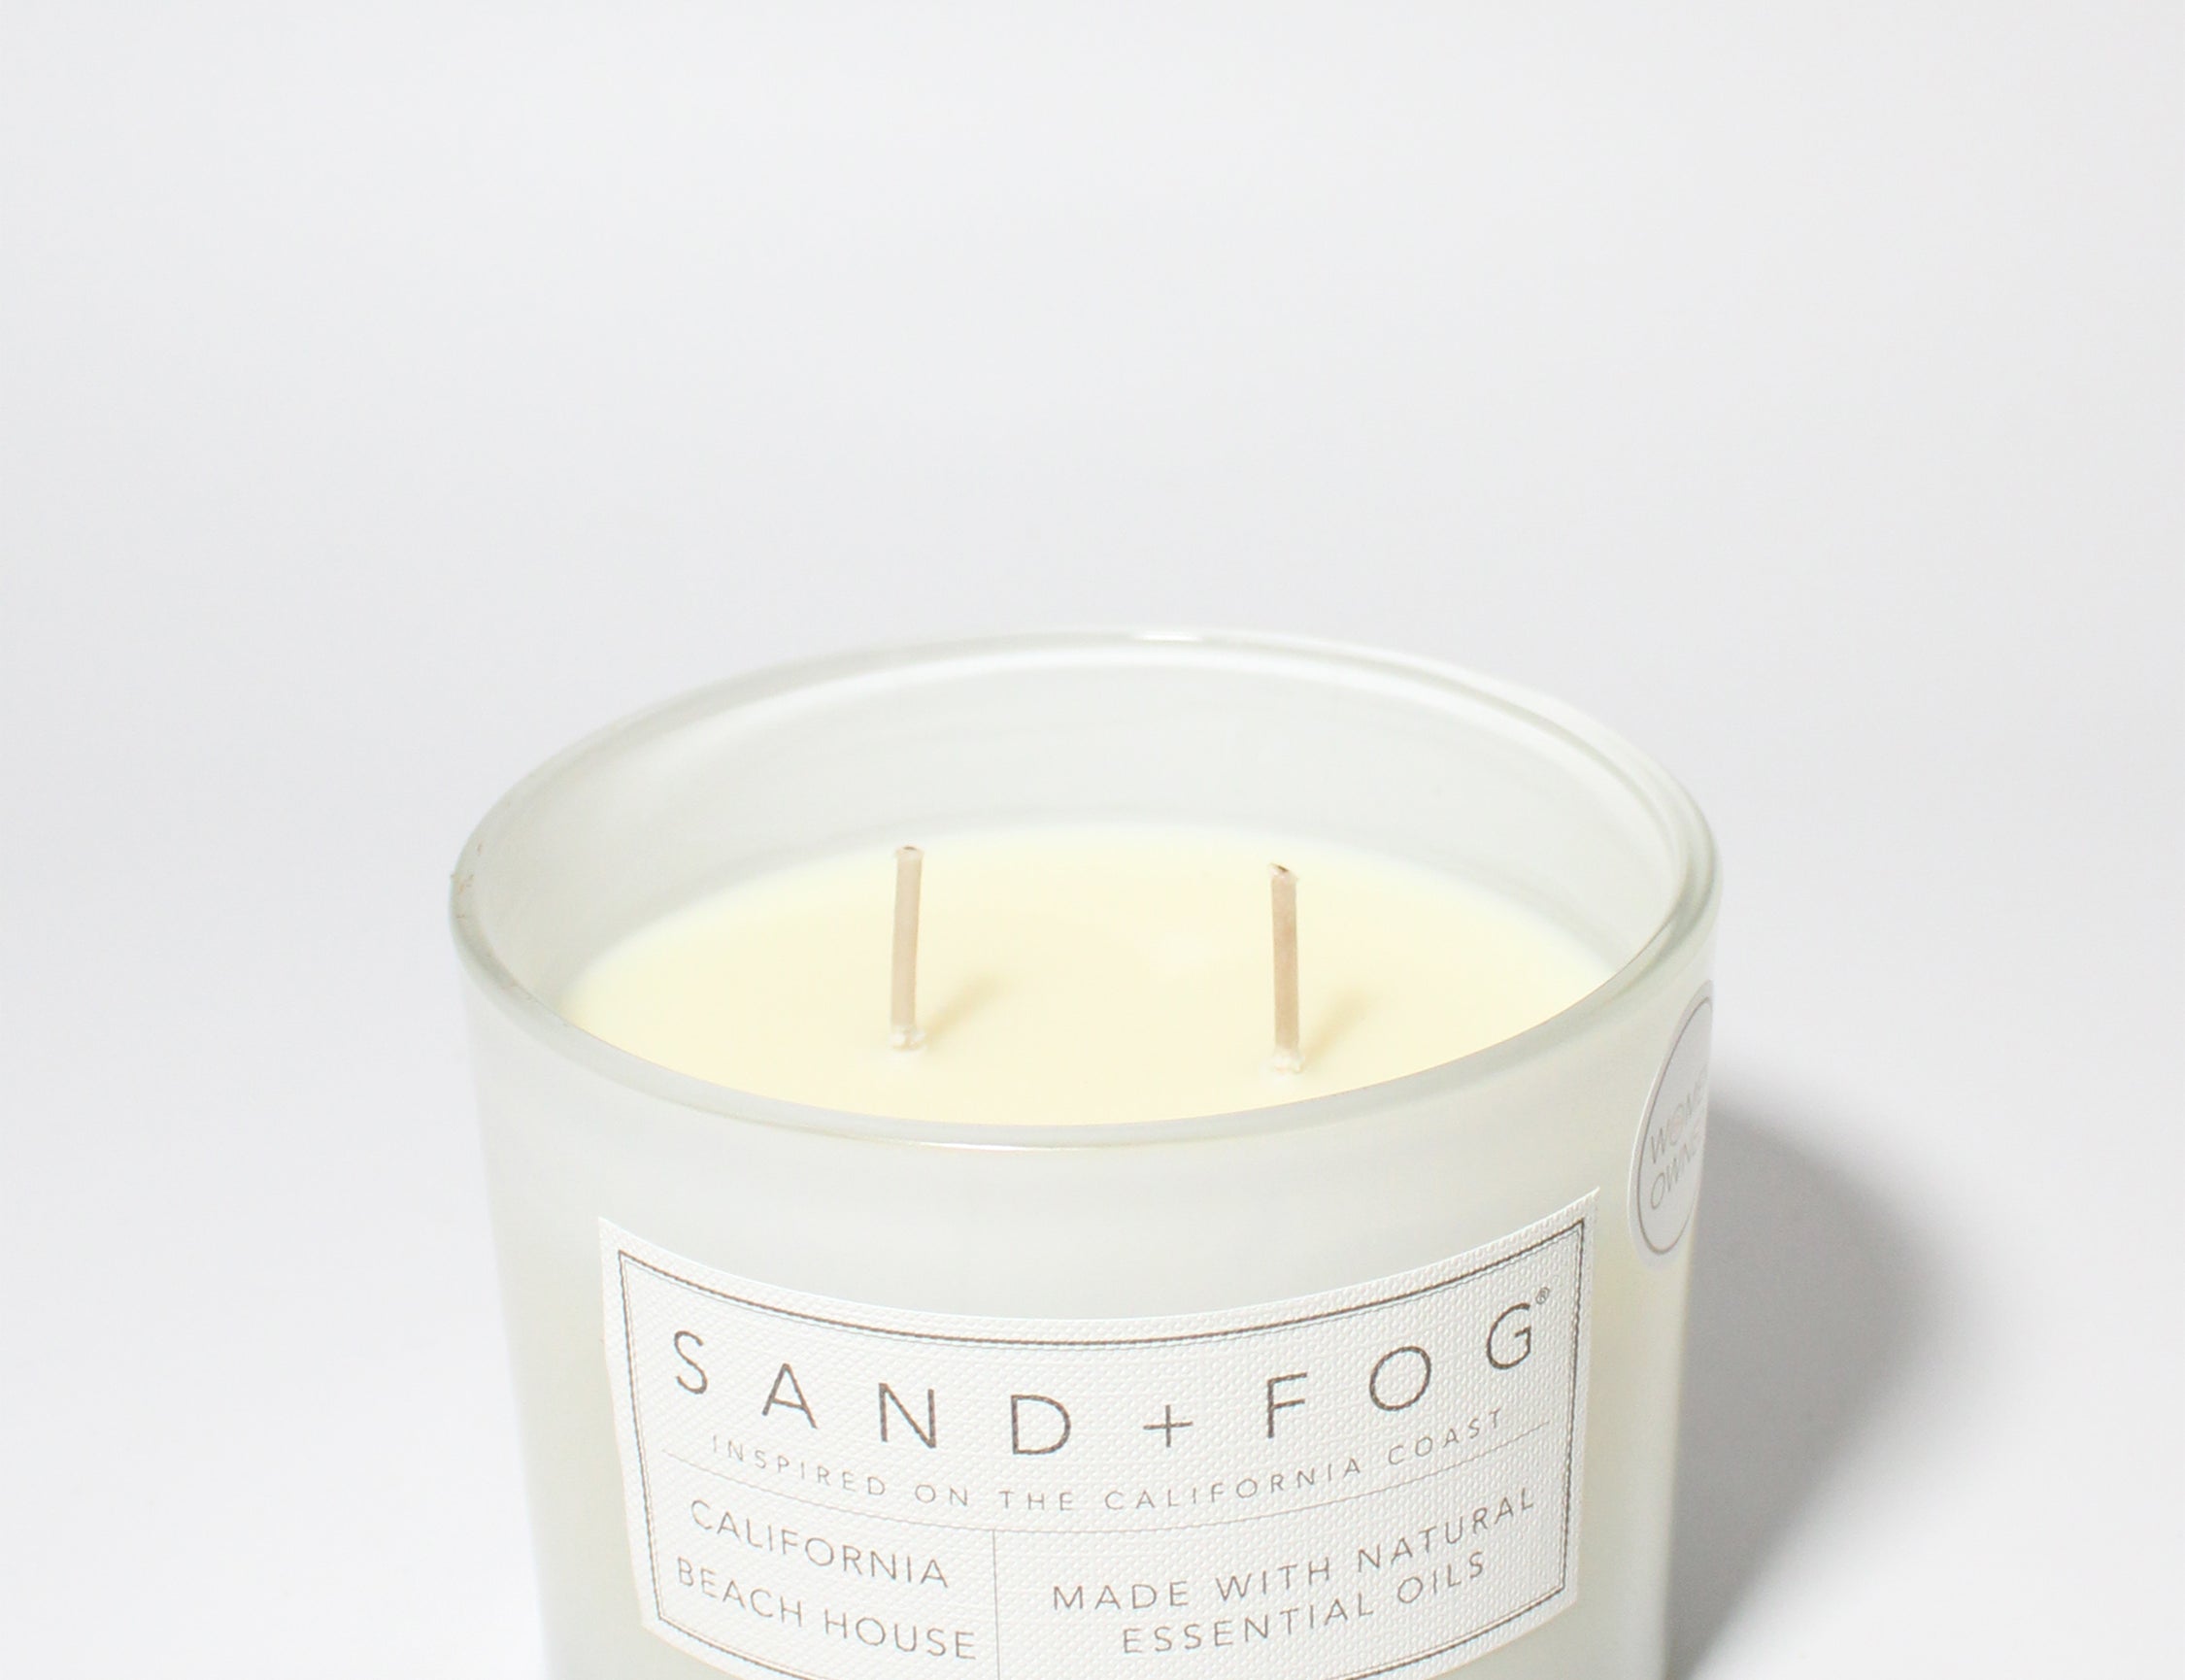 Sand + Fog California Beach House 12 oz scented candle